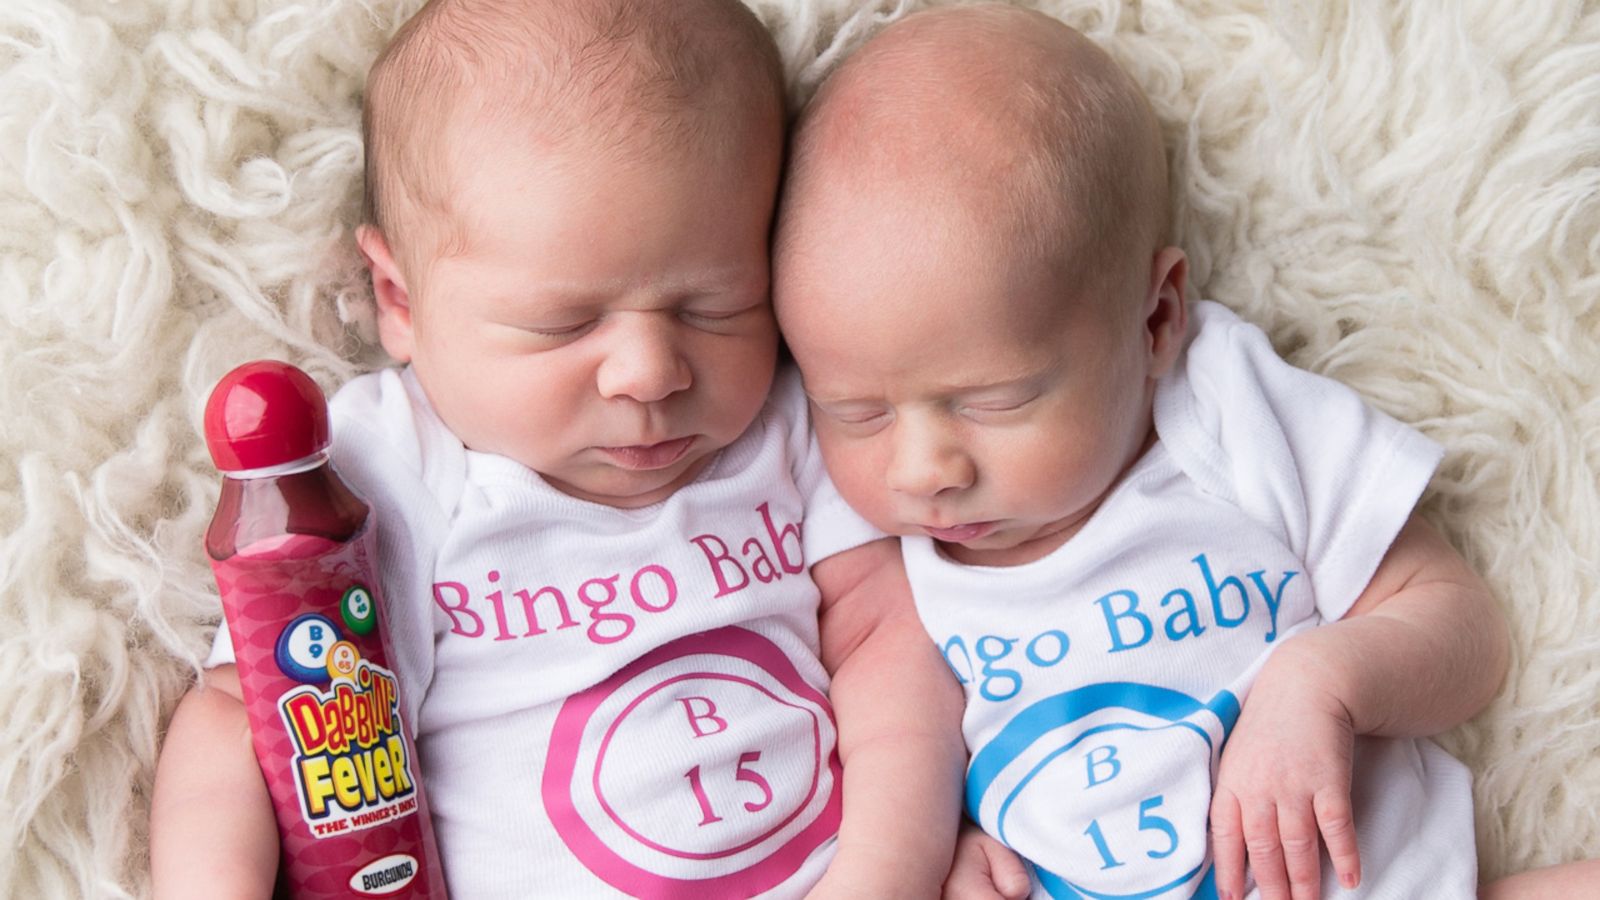 VIDEO: Mom of 'bingo babies' reflects on her lucky gift of in vitro fertilization